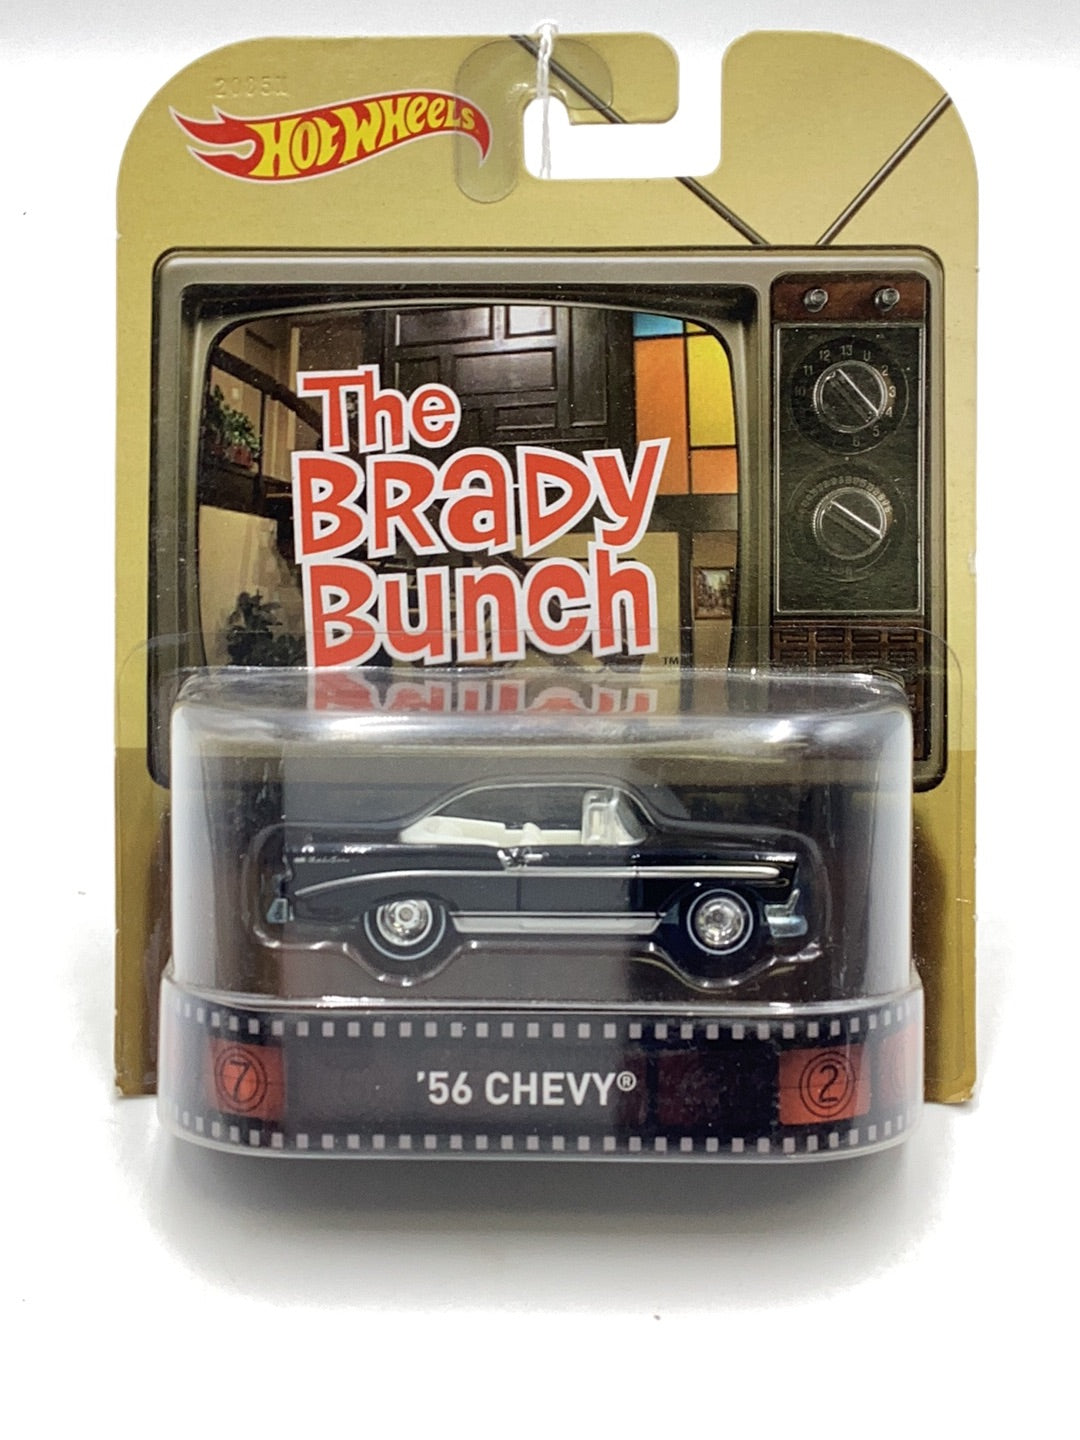 Hot wheels retro entertainment The Brady bunch 56 Chevy 242A